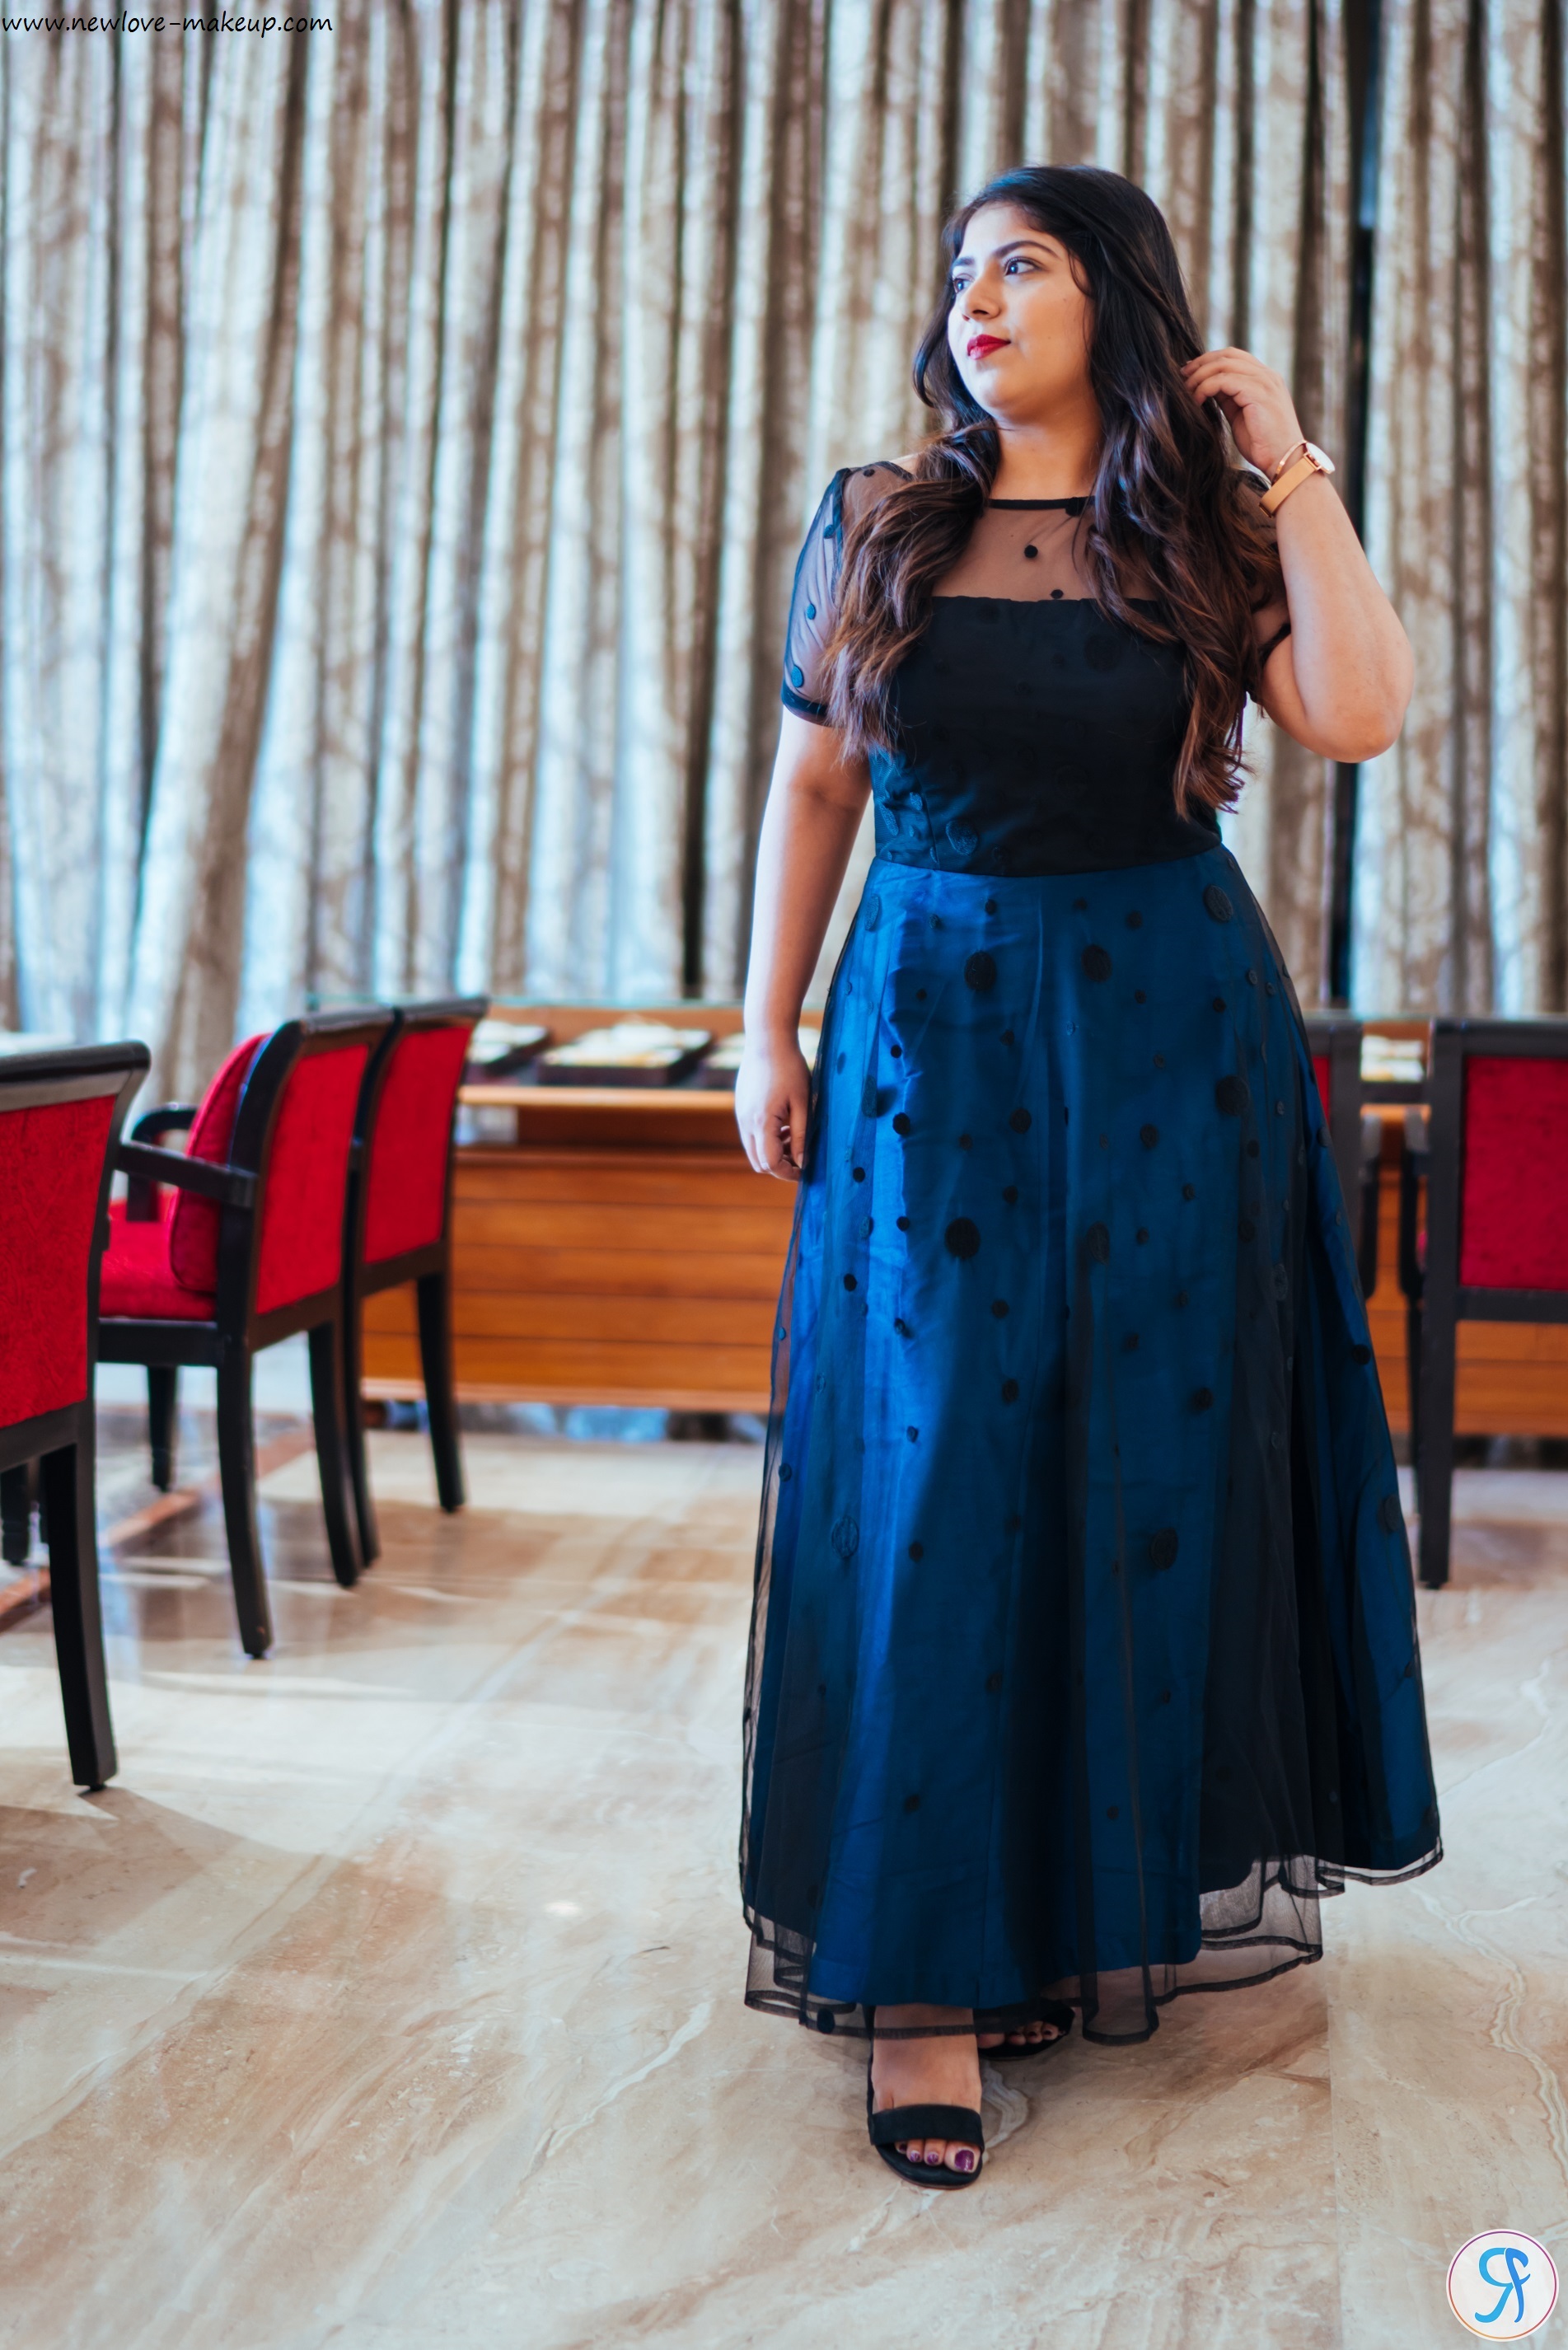 OOTD: Blue & Black Mesh Polka Maxi Dress, eShakti Gown, Indian Fashion Blog